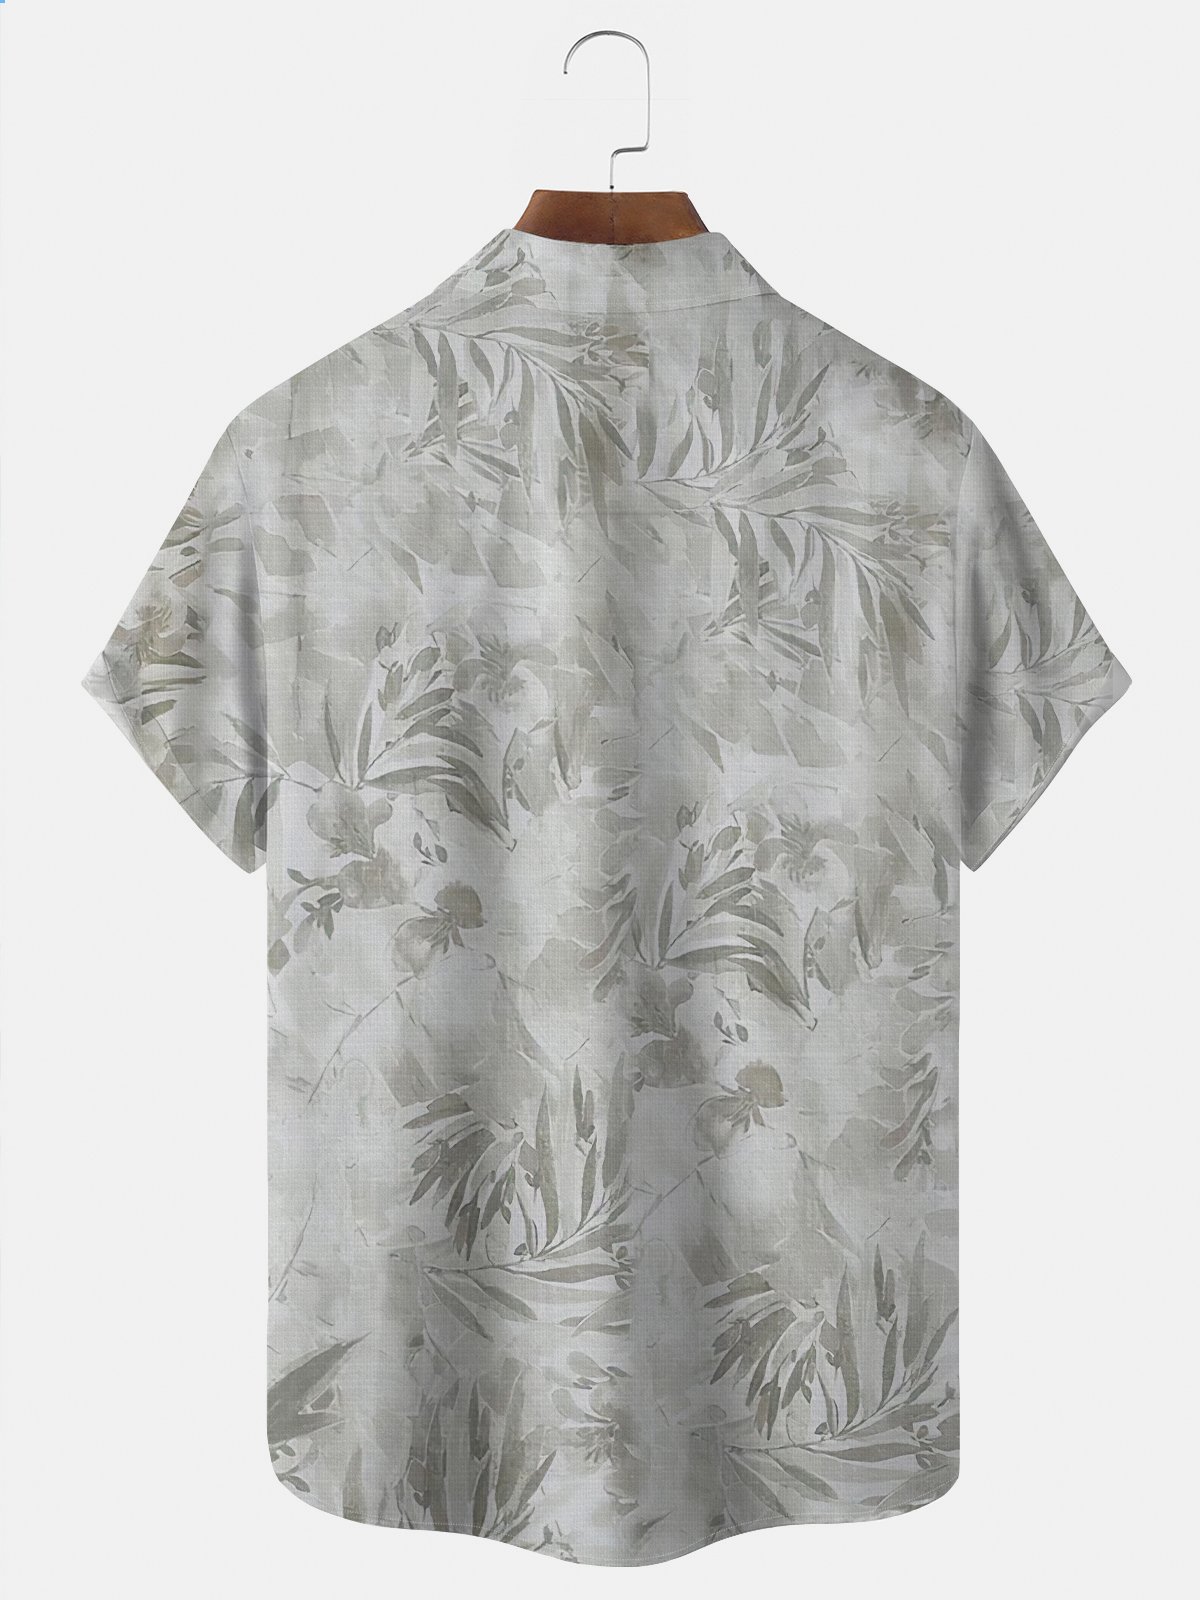  Cotton Linen Floral Hawaiian Shirt Oversized Vacation Aloha Shirt